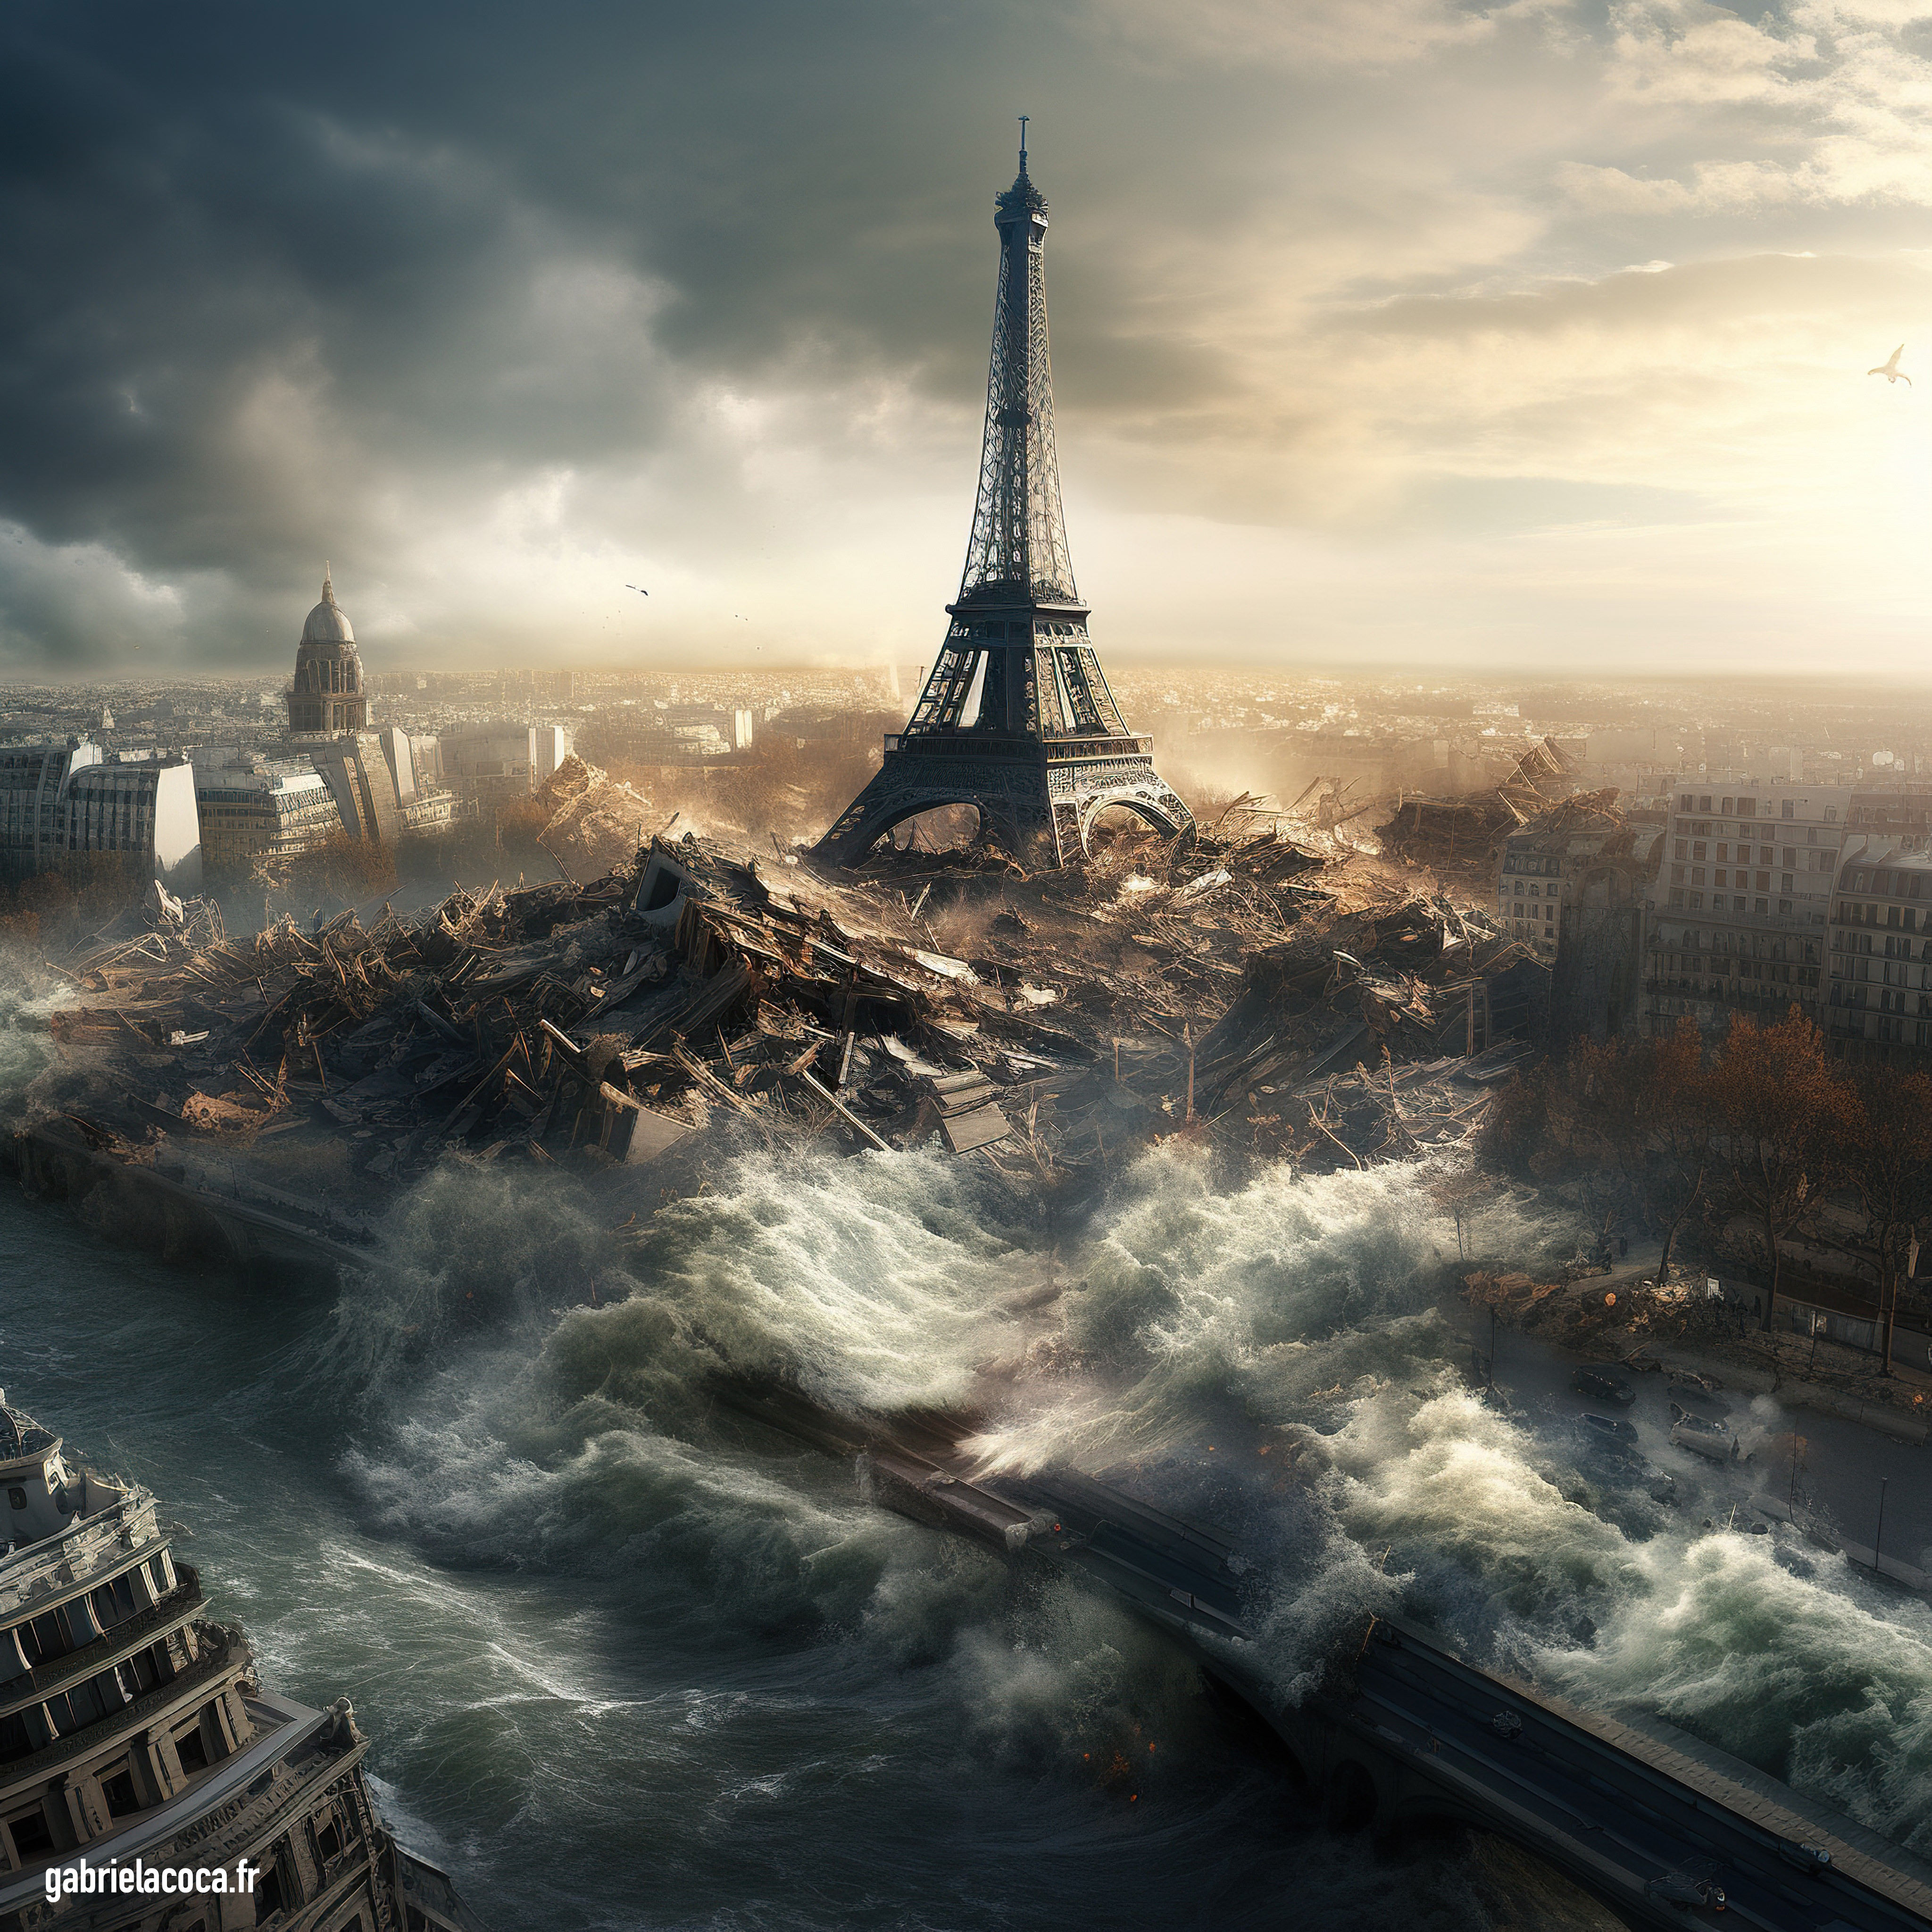 tsunami over paris - deep fake